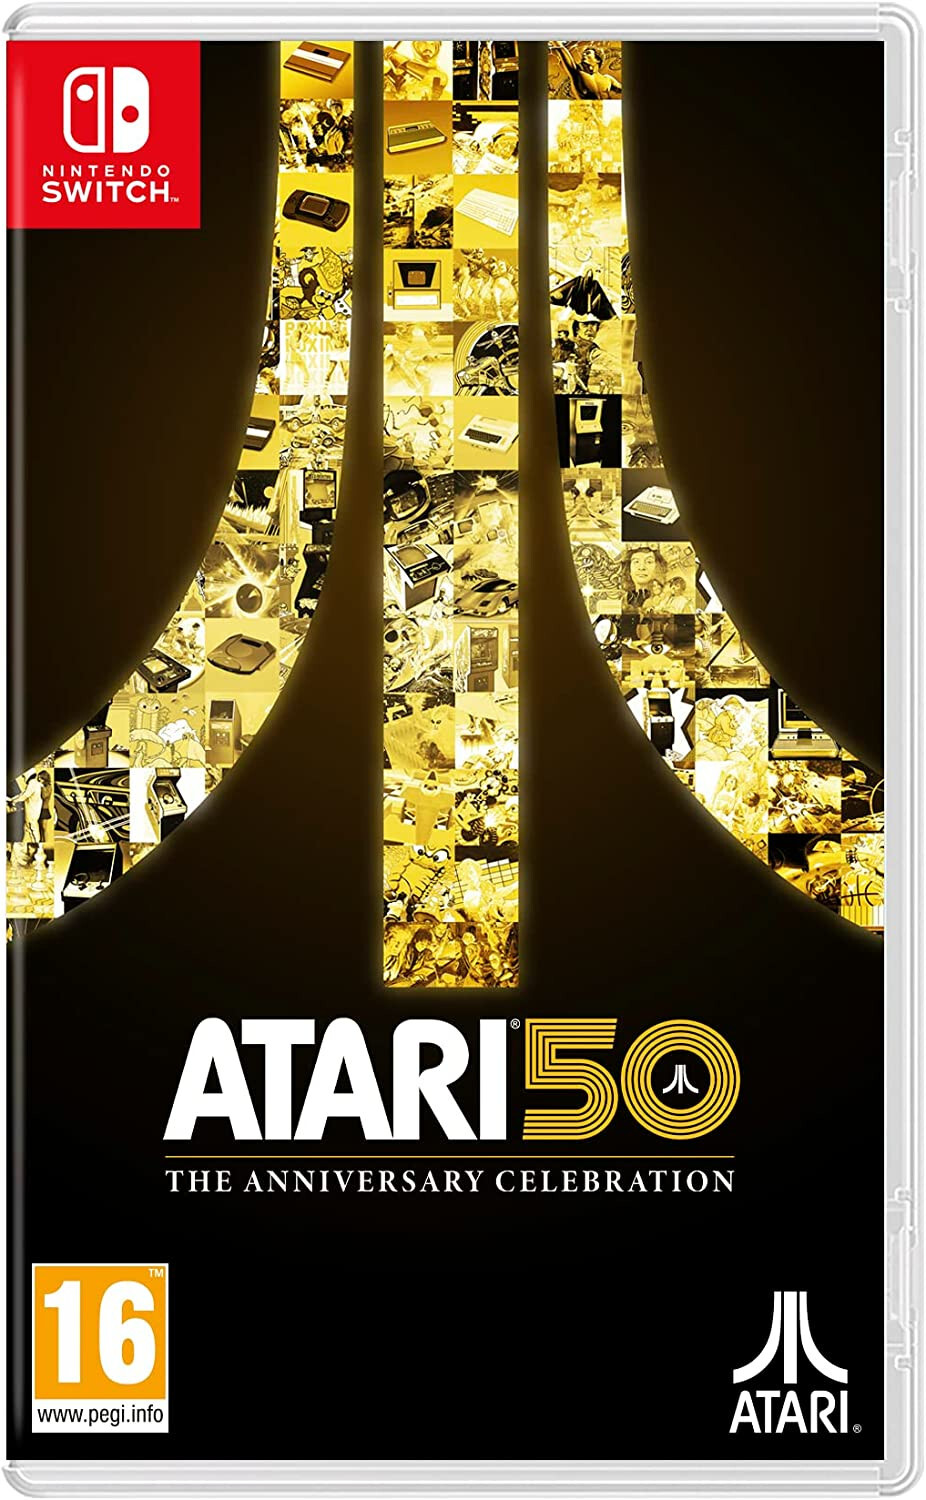 Atari 50 the anniversary celebration Nintendo Switch